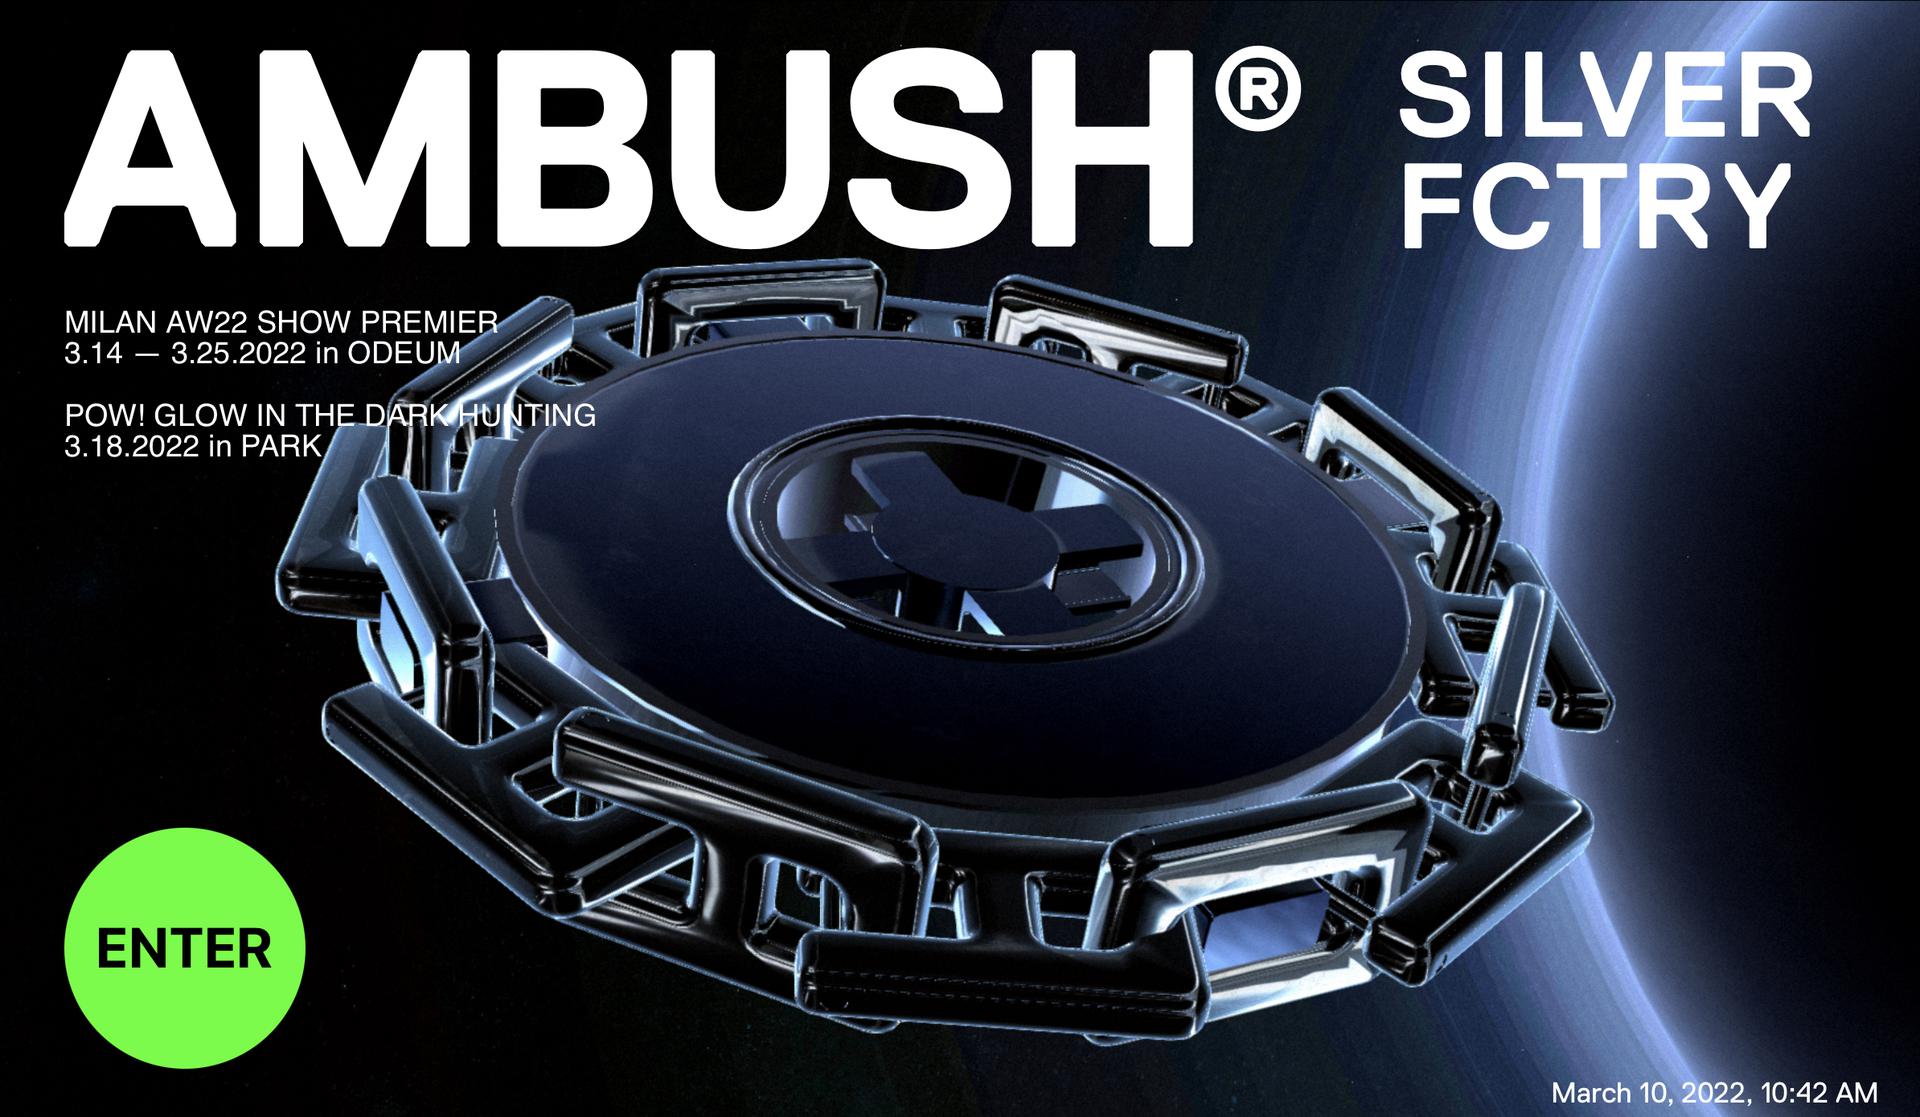 AMBUSH、メタバース『AMBUSH SILVER FCTRY』を公開！　ショップでのアイテム購入や各種映像の視聴も可能